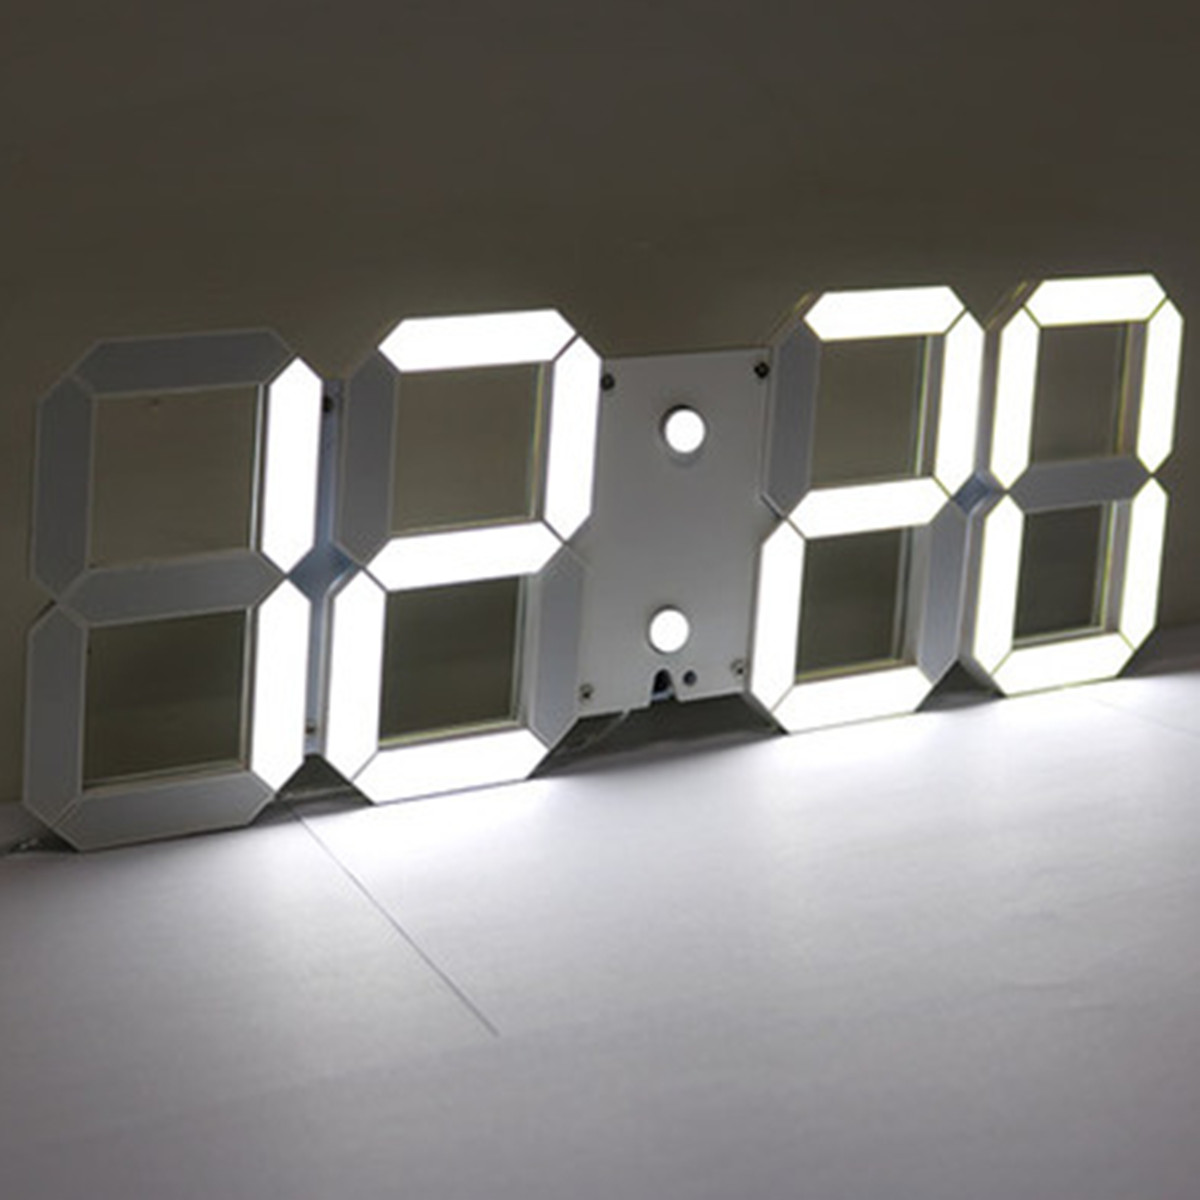 

3D Acrylic White Large Digital LED Skeleton Wall Clock Timer 24/12 Hour Display